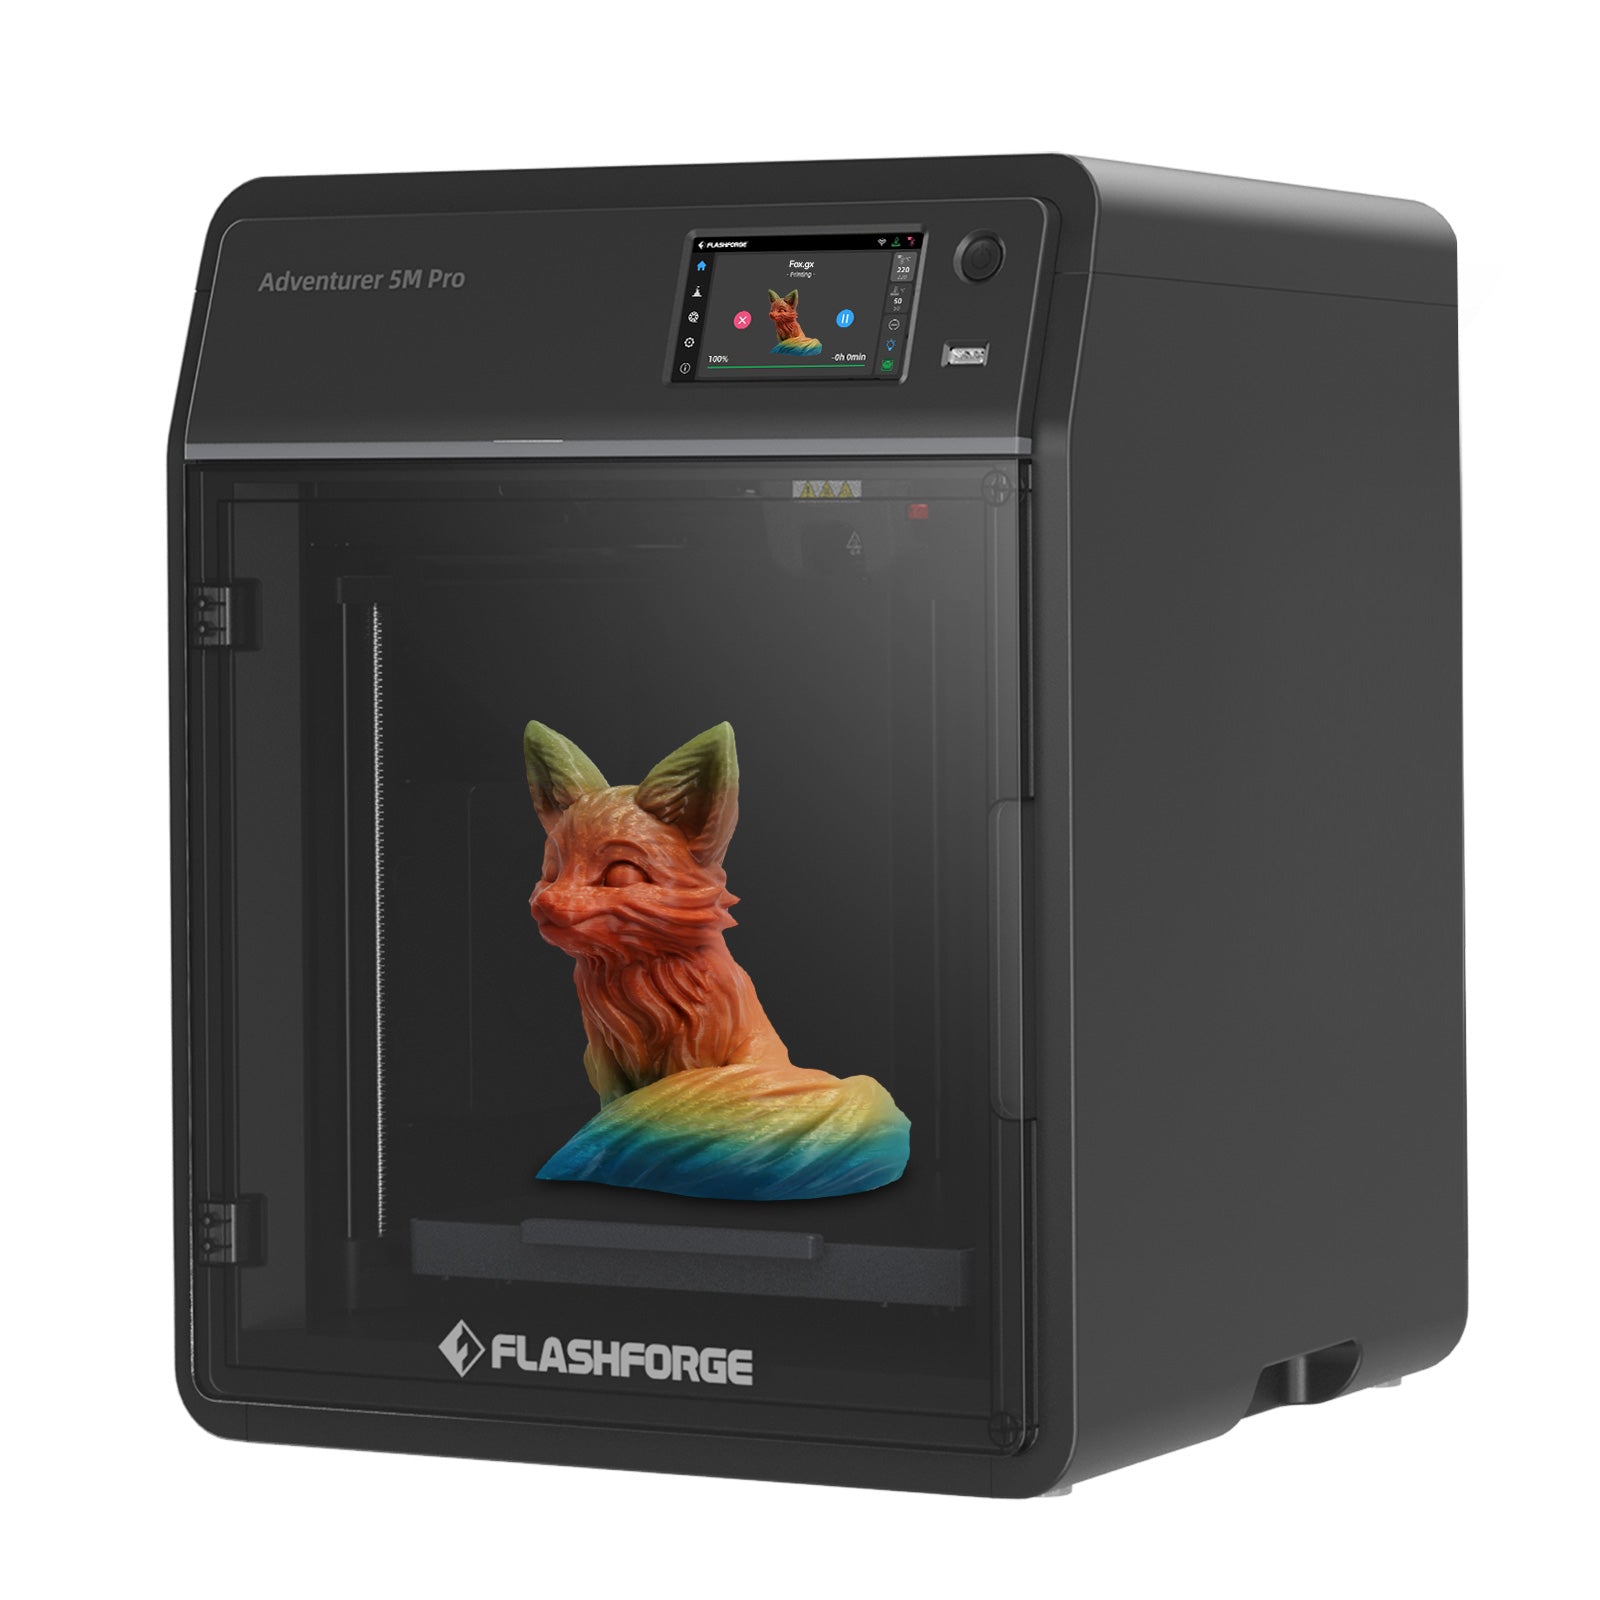 Flashforge Adventurer 5M Pro 3D Printer Product Image